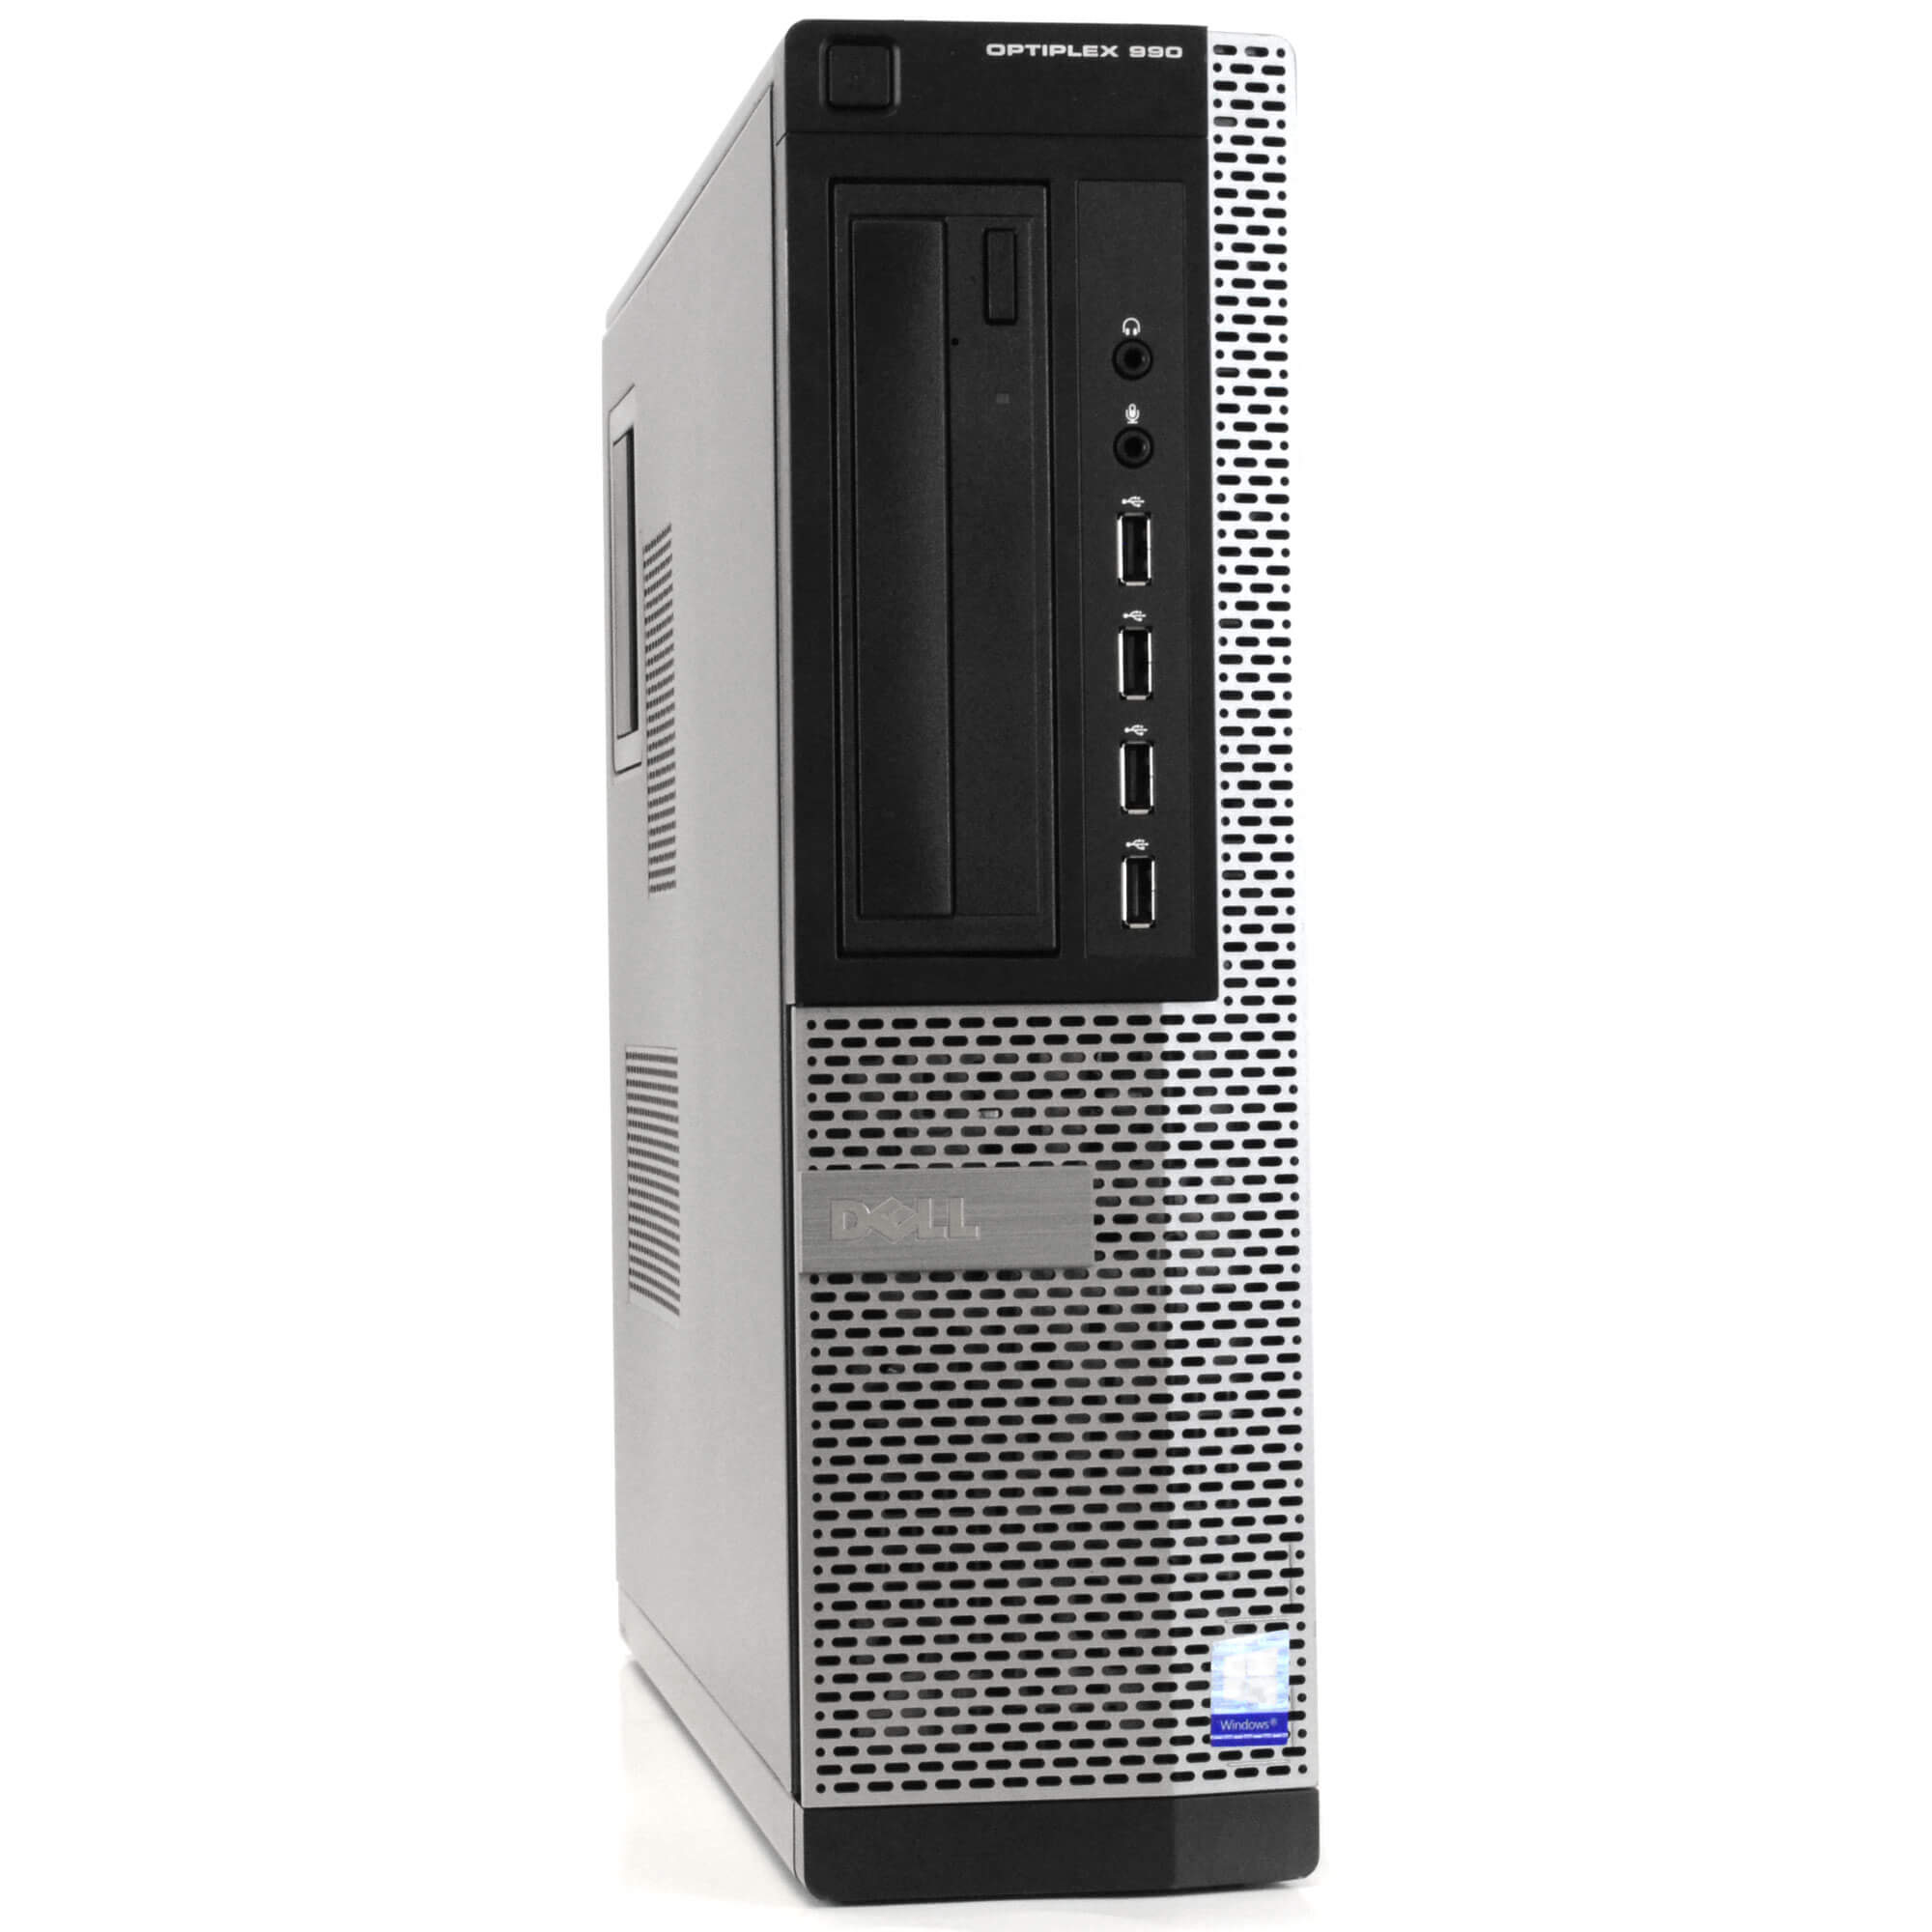 Dell OptiPlex 990 Desktop Computer: Intel Core i5 (2nd Gen), Windows 10, WiFi